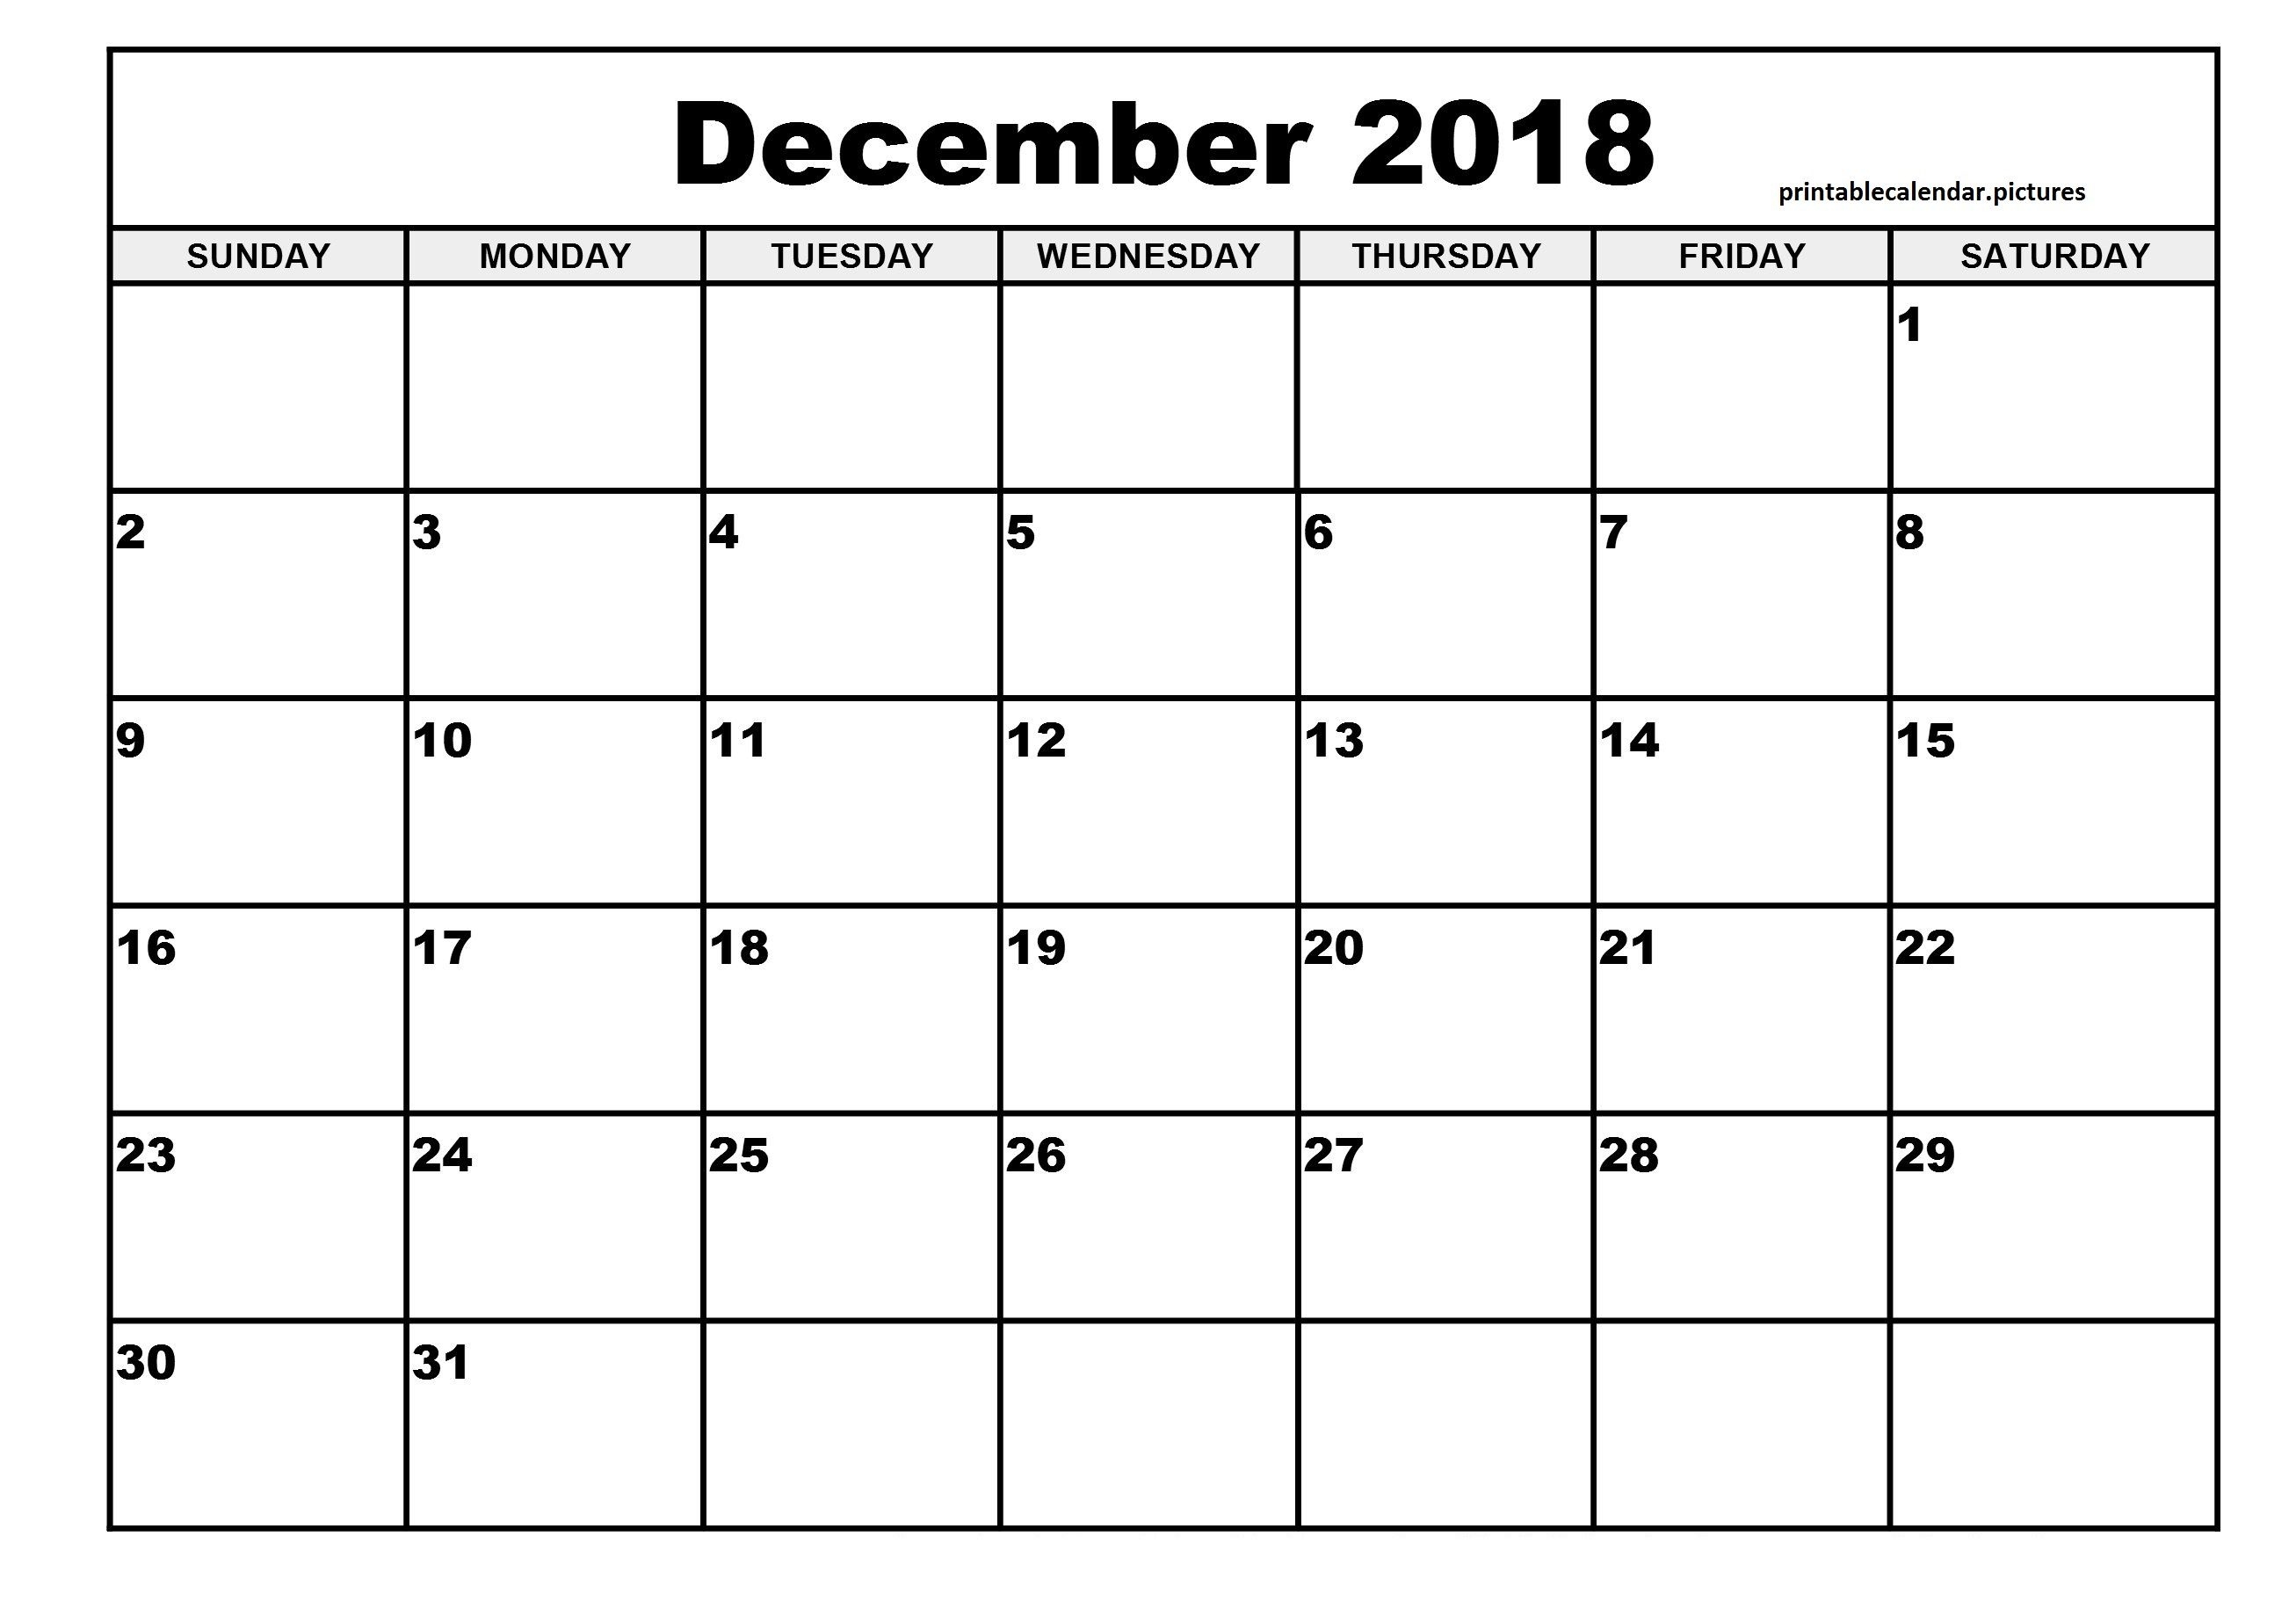 December Calendar 2018 Printable Black And White | Free Black And White Calendar Template